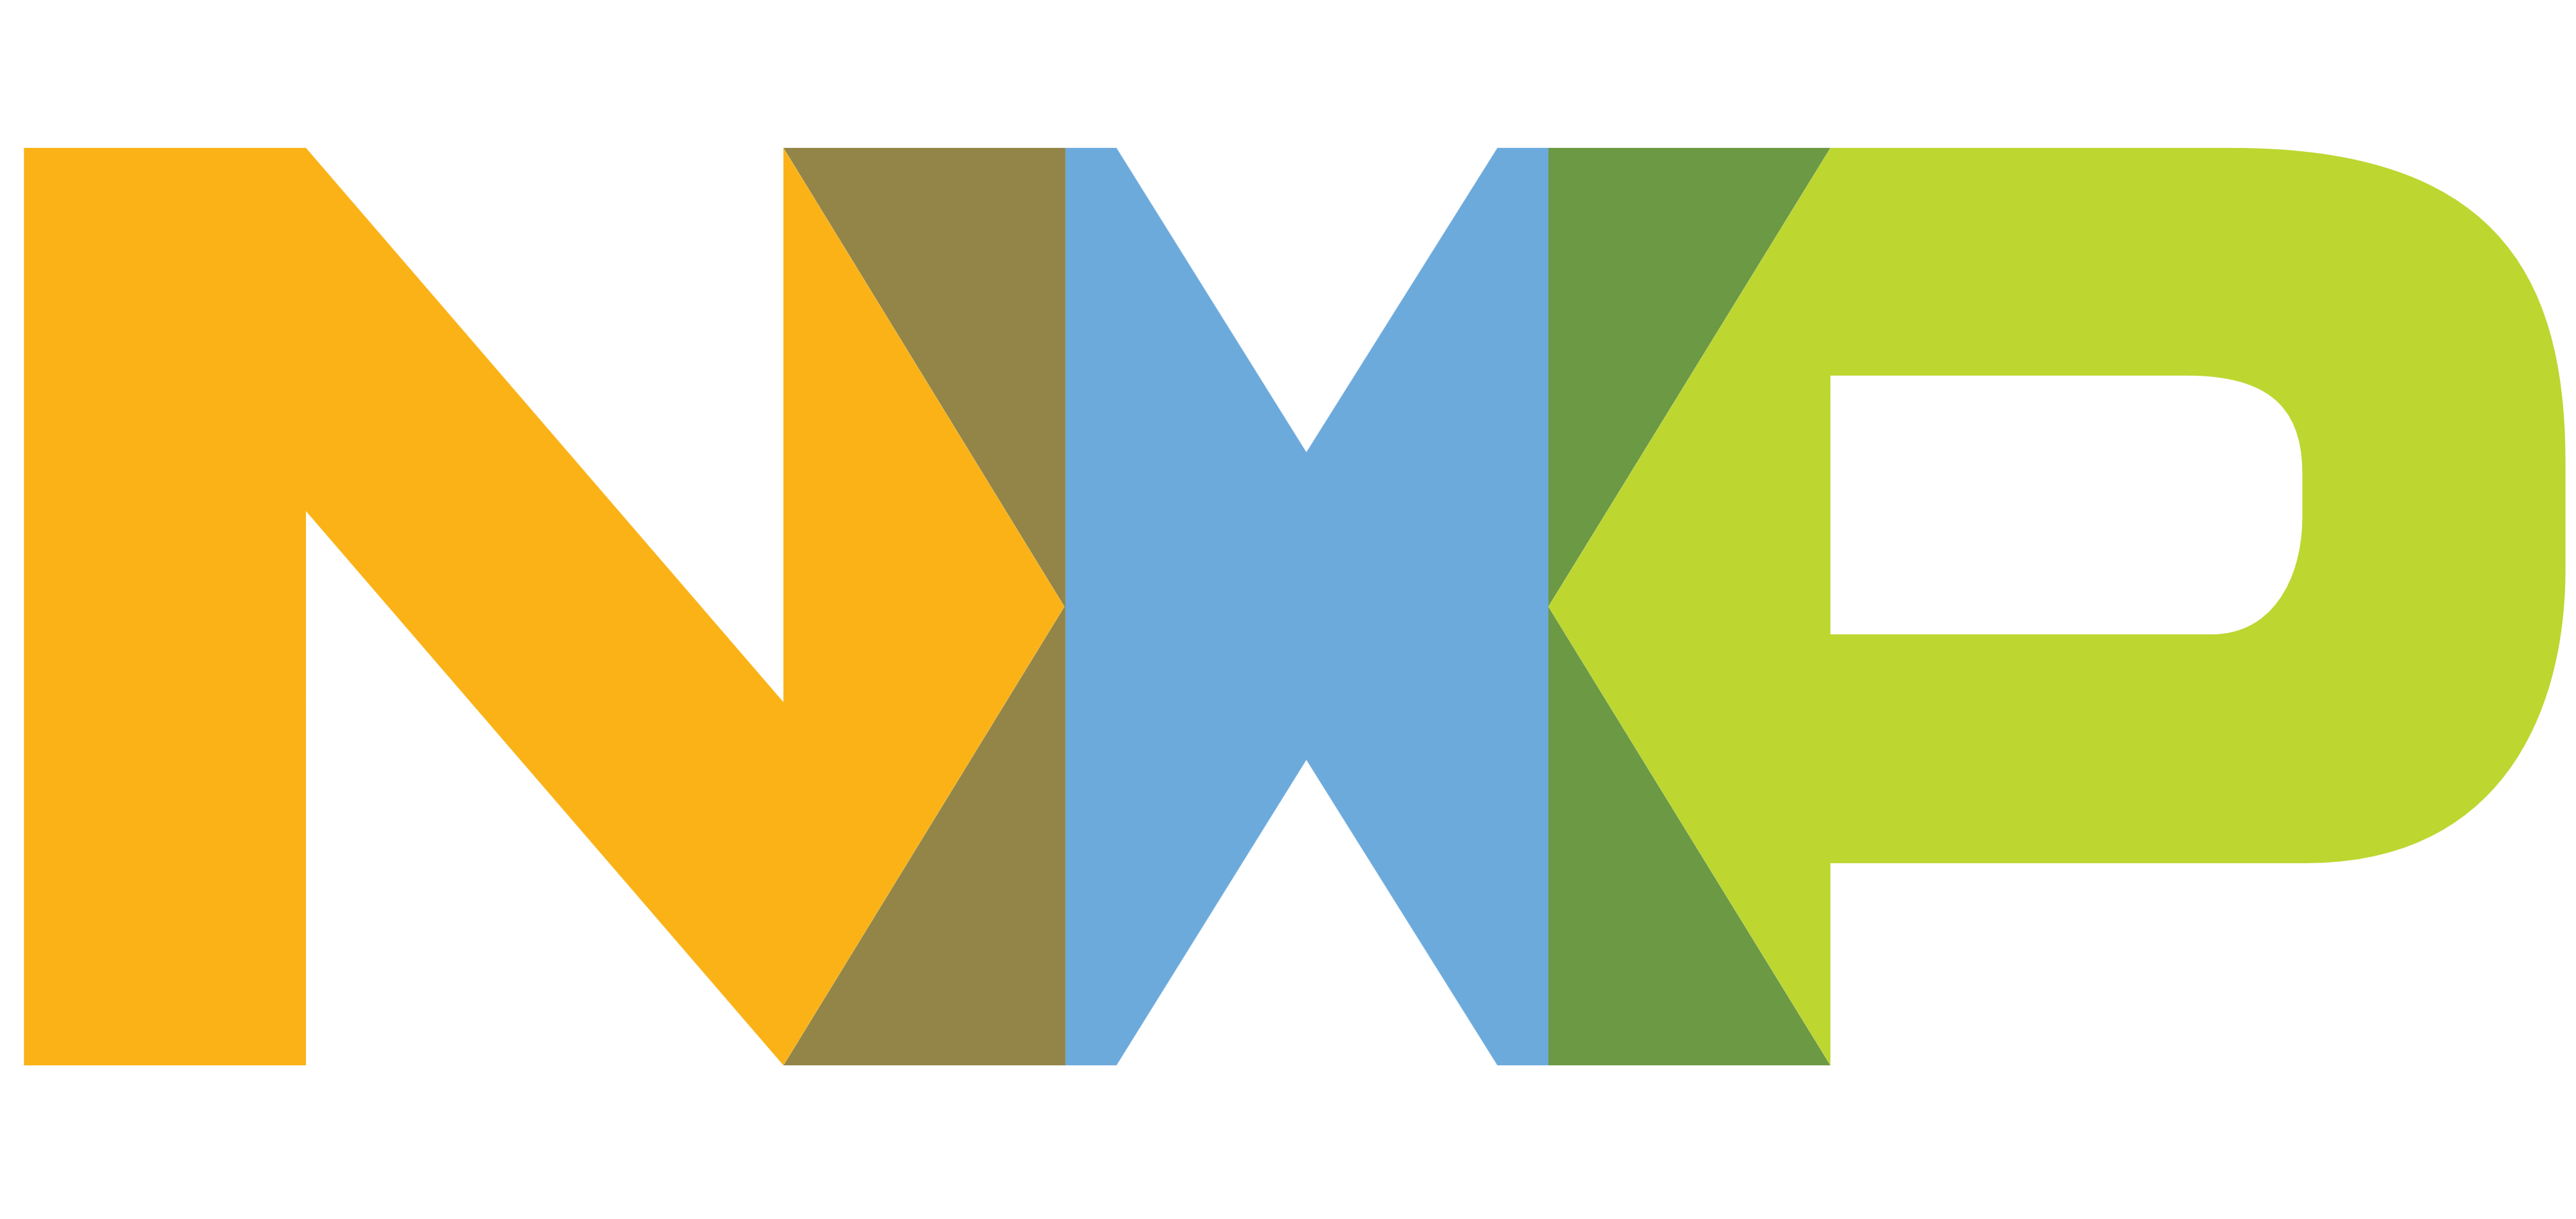 NXP Semiconductor Logo - NXP Semiconductors